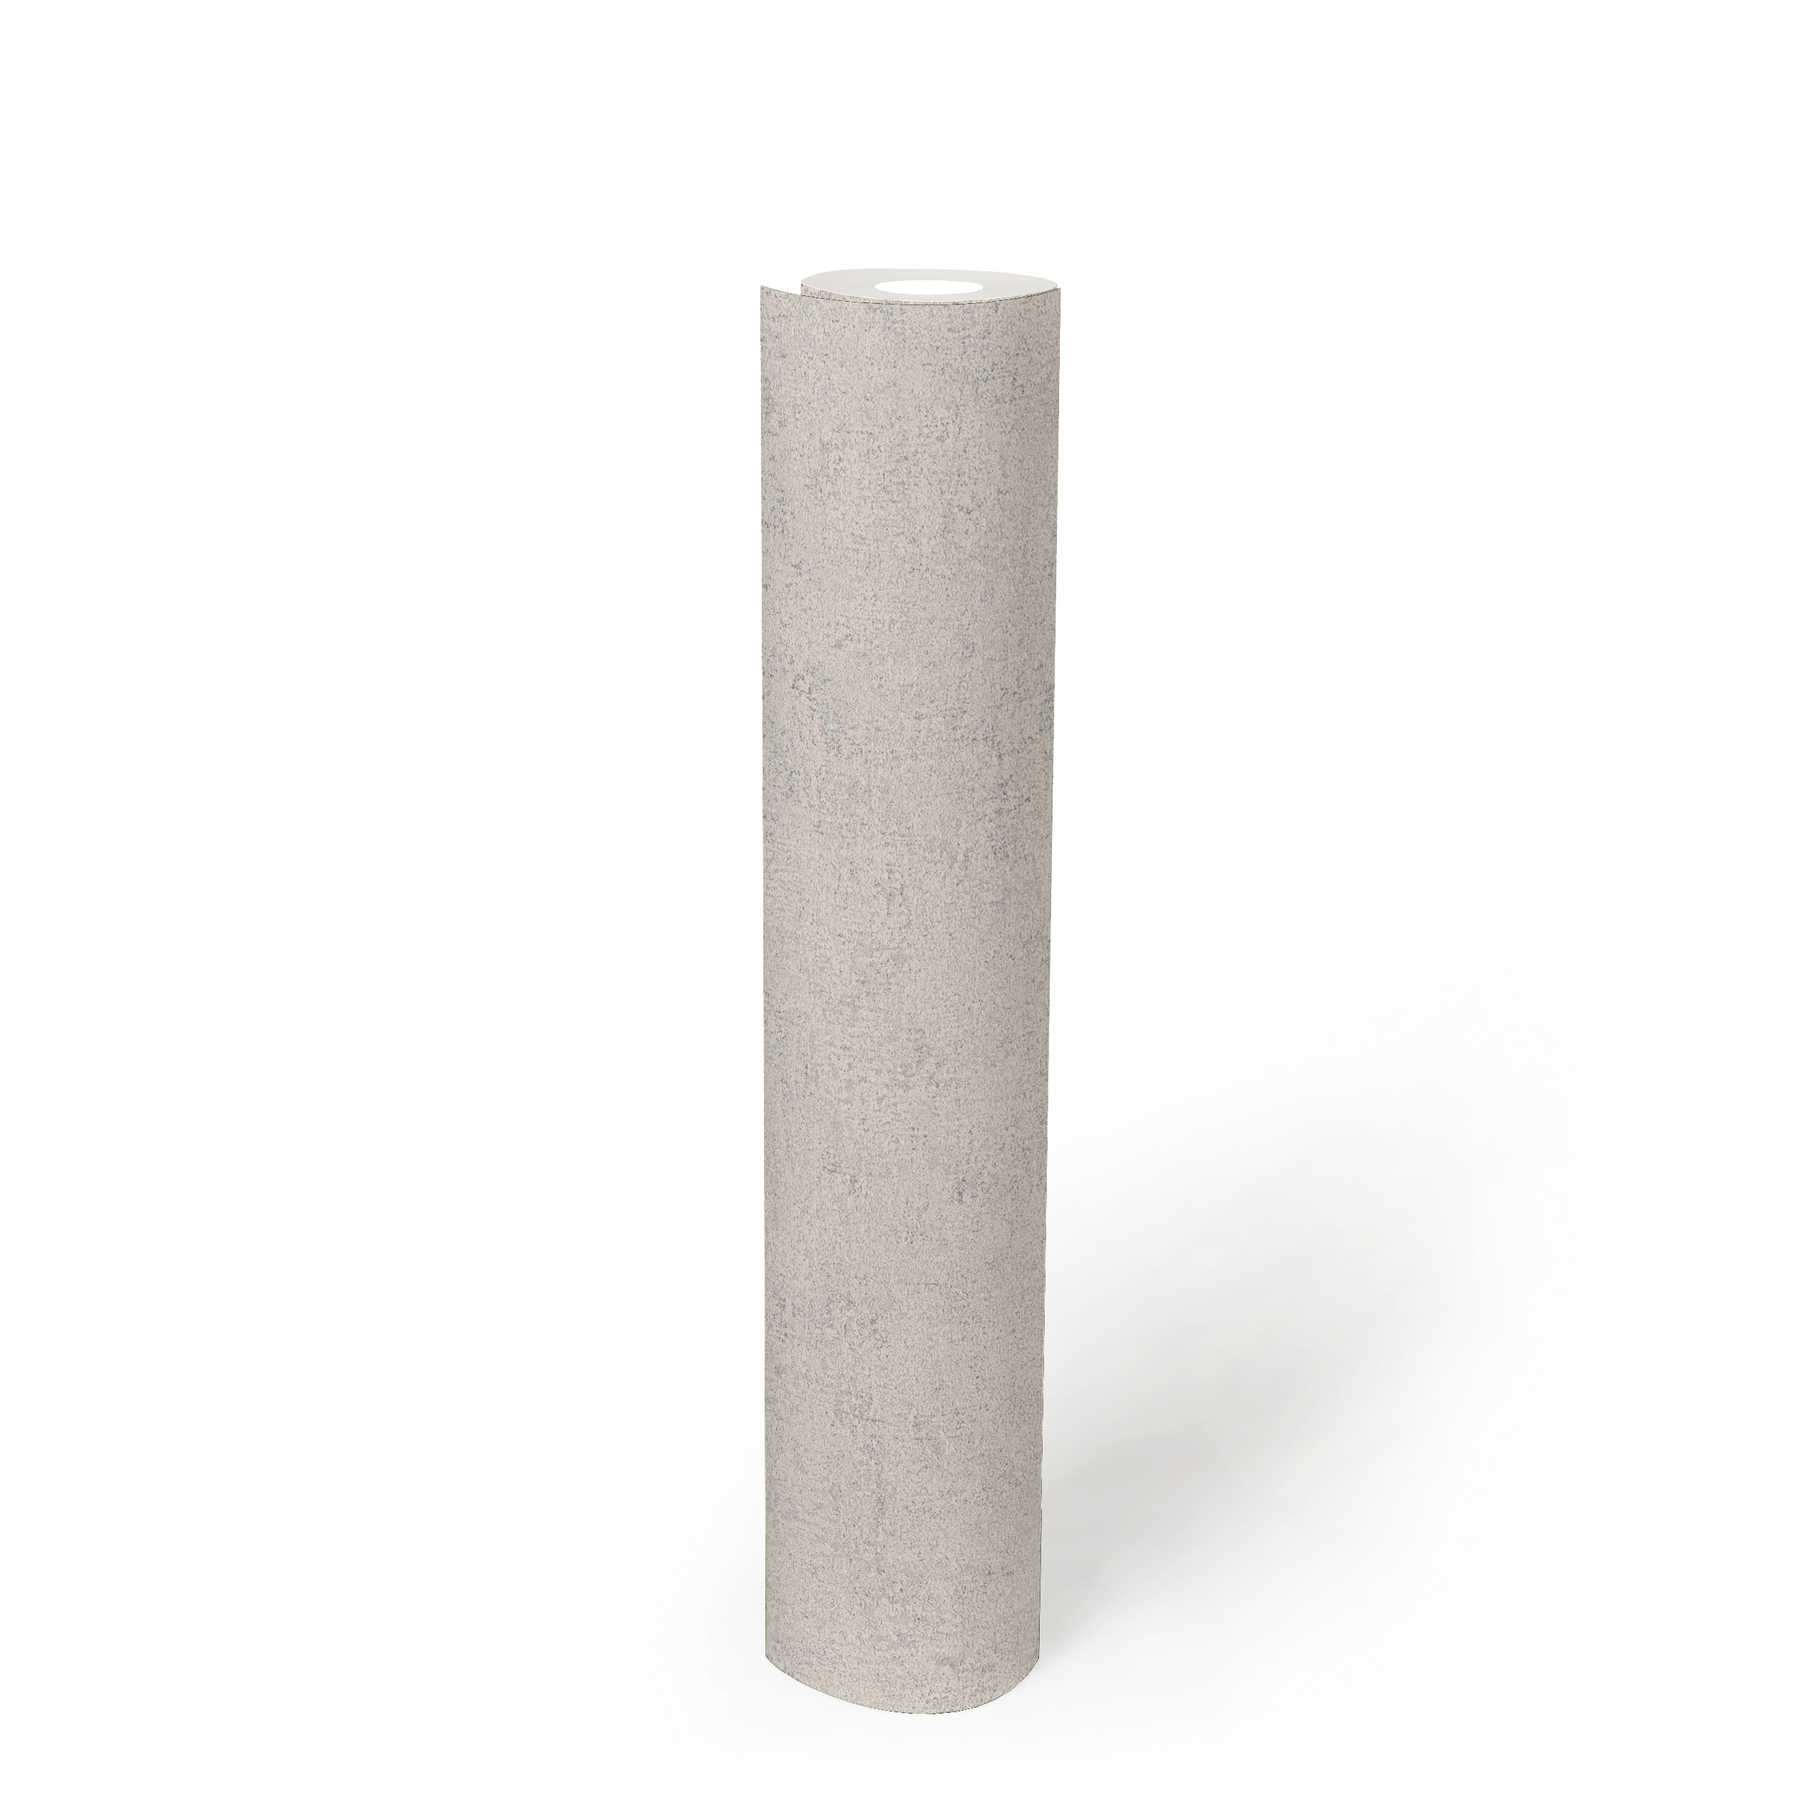             Plaster optics wallpaper light grey in used look with metallic accent
        